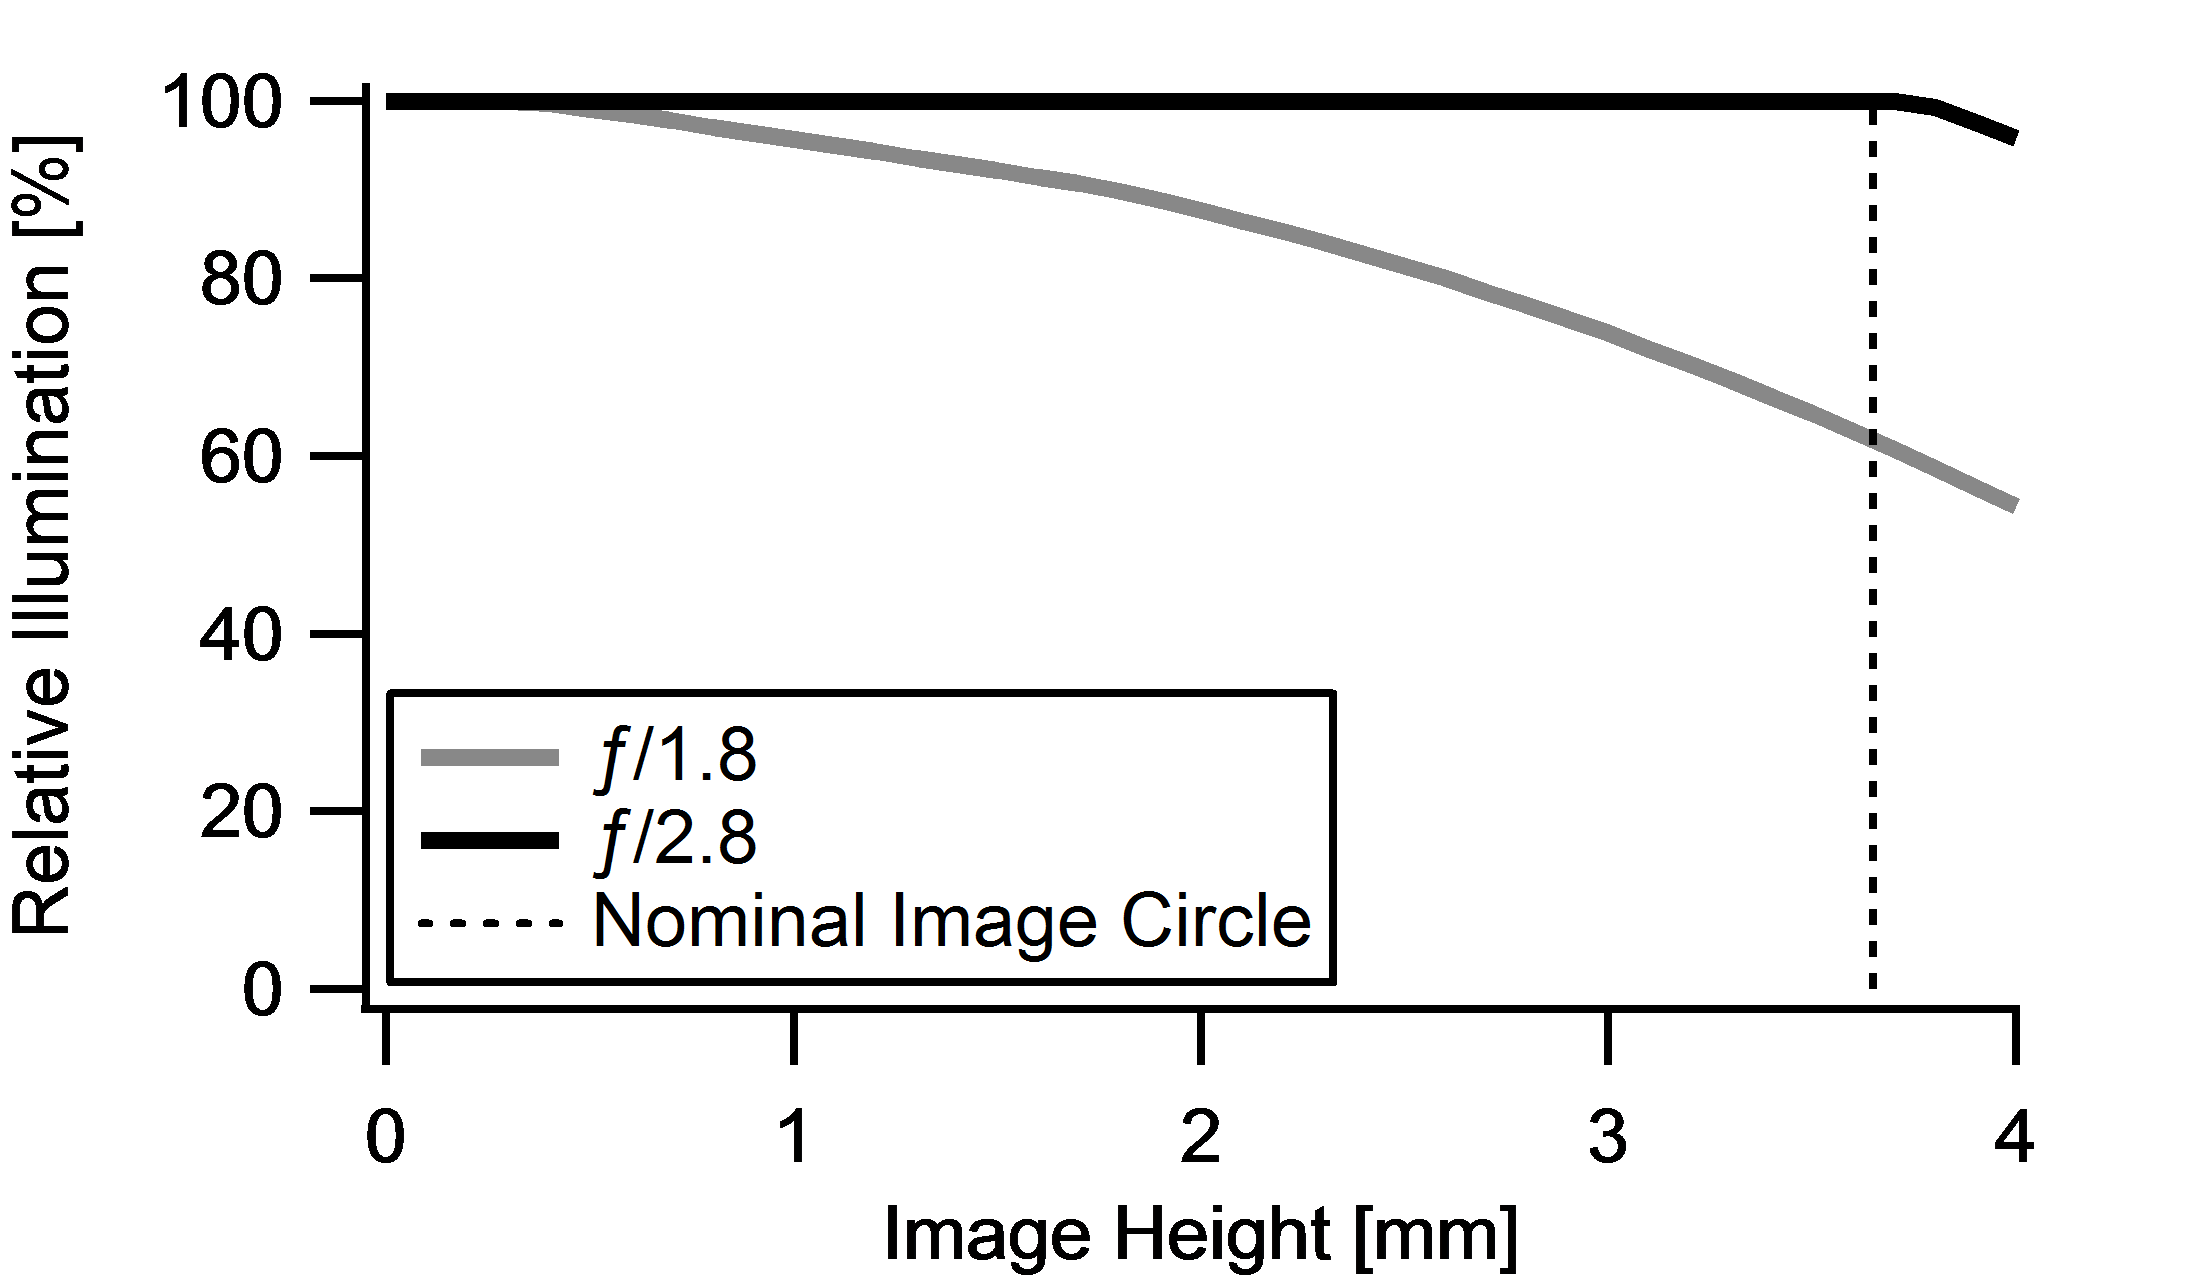 Relative Illumination versus Image Height